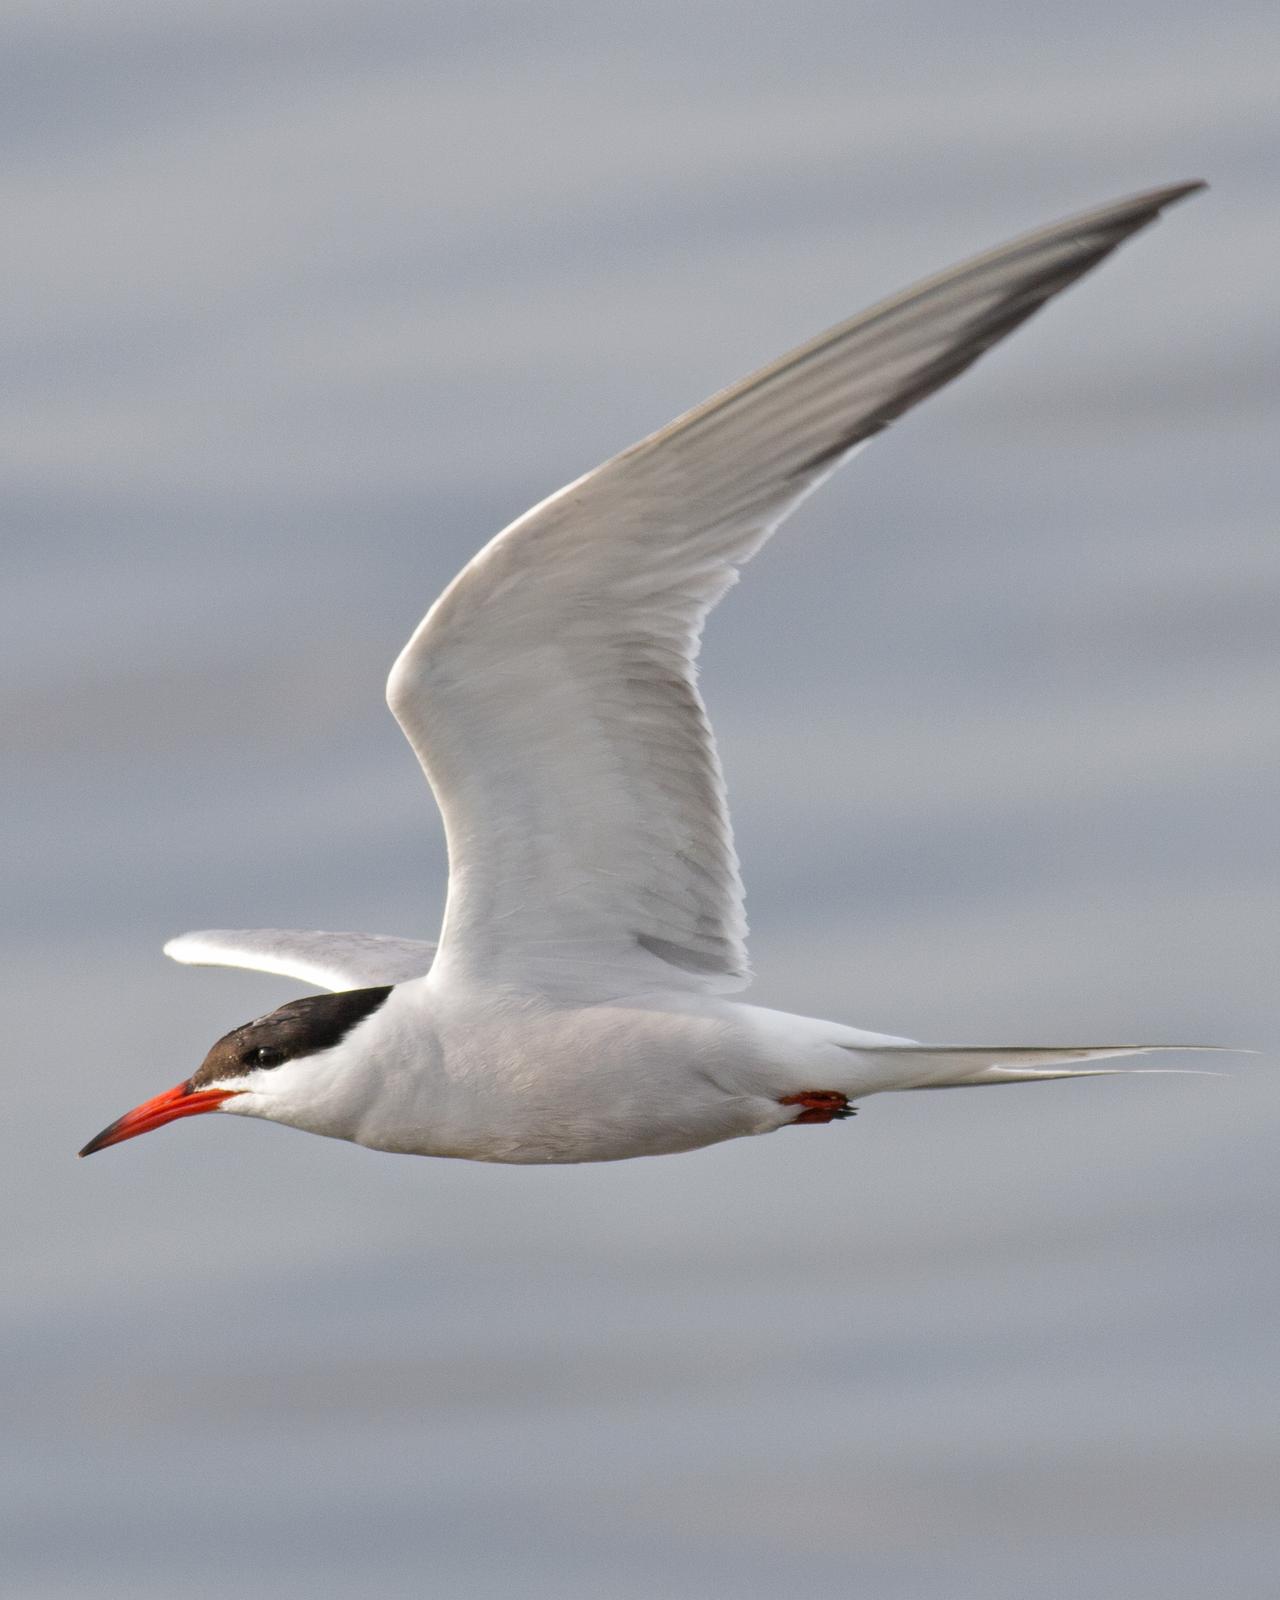 Common Tern Photo by Joshua Jones